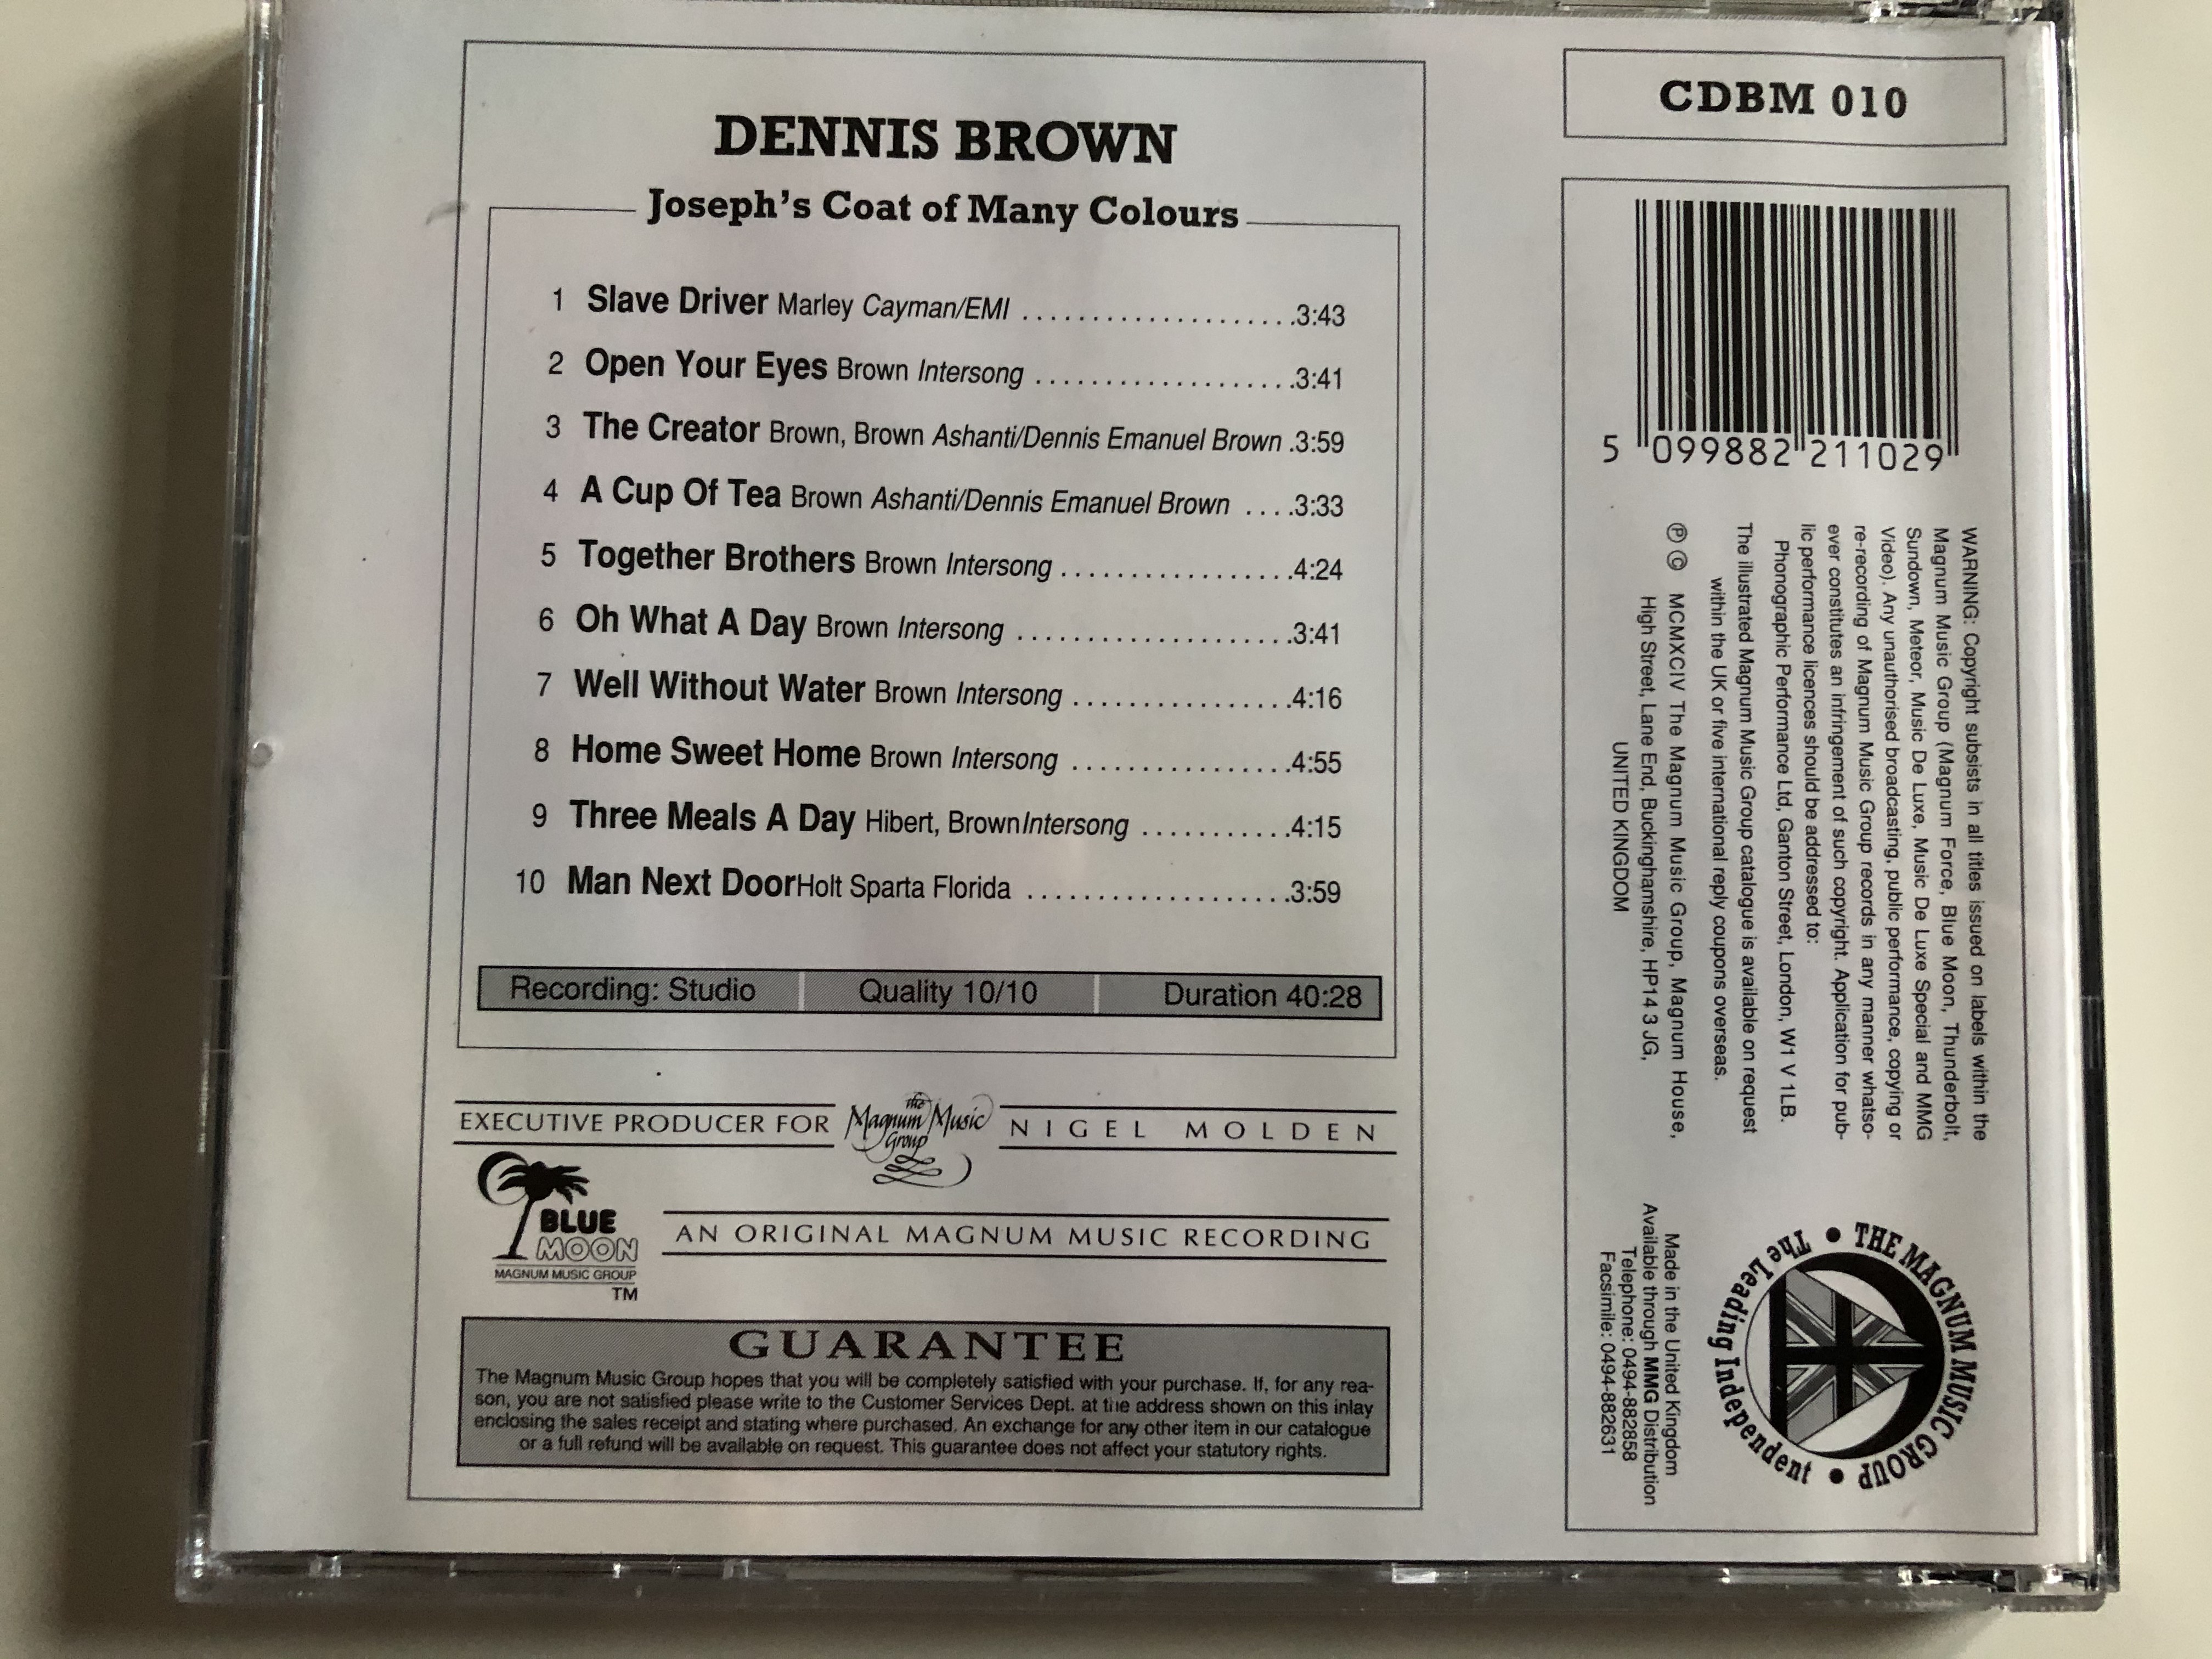 dennis-brown-joseph-s-coat-of-many-colours-blue-moon-audio-cd-1994-cdbm-010-5-.jpg